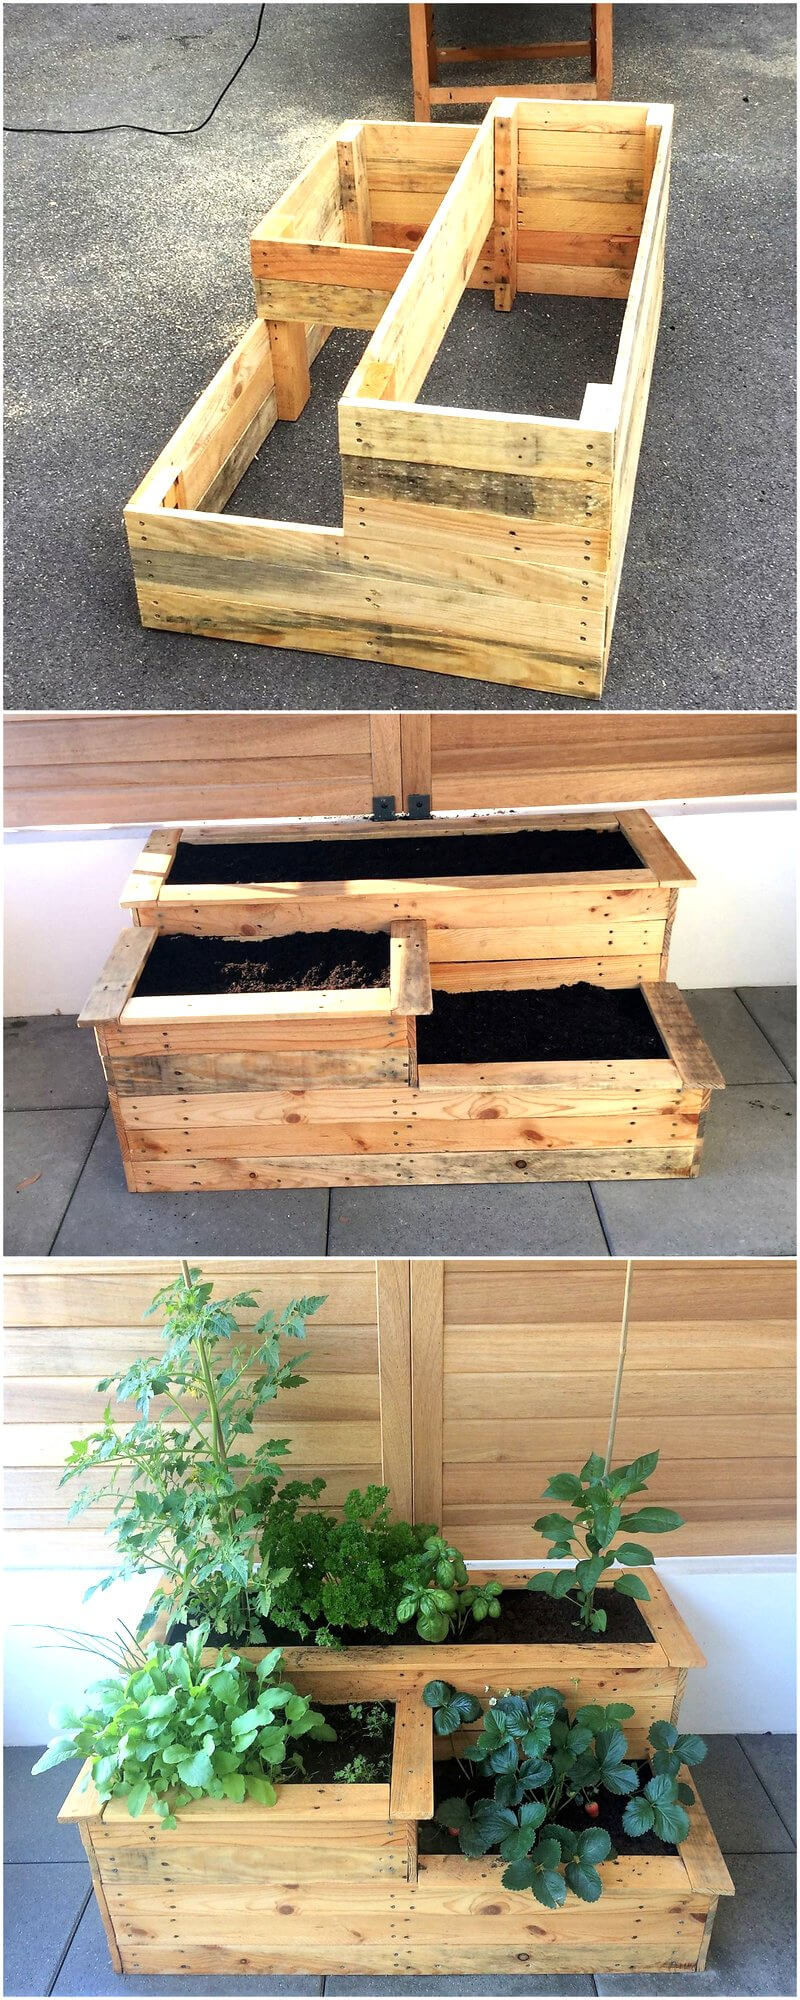 DIY Pallet Planter Box
 Repurposing Plans for Shipping Wood Pallets